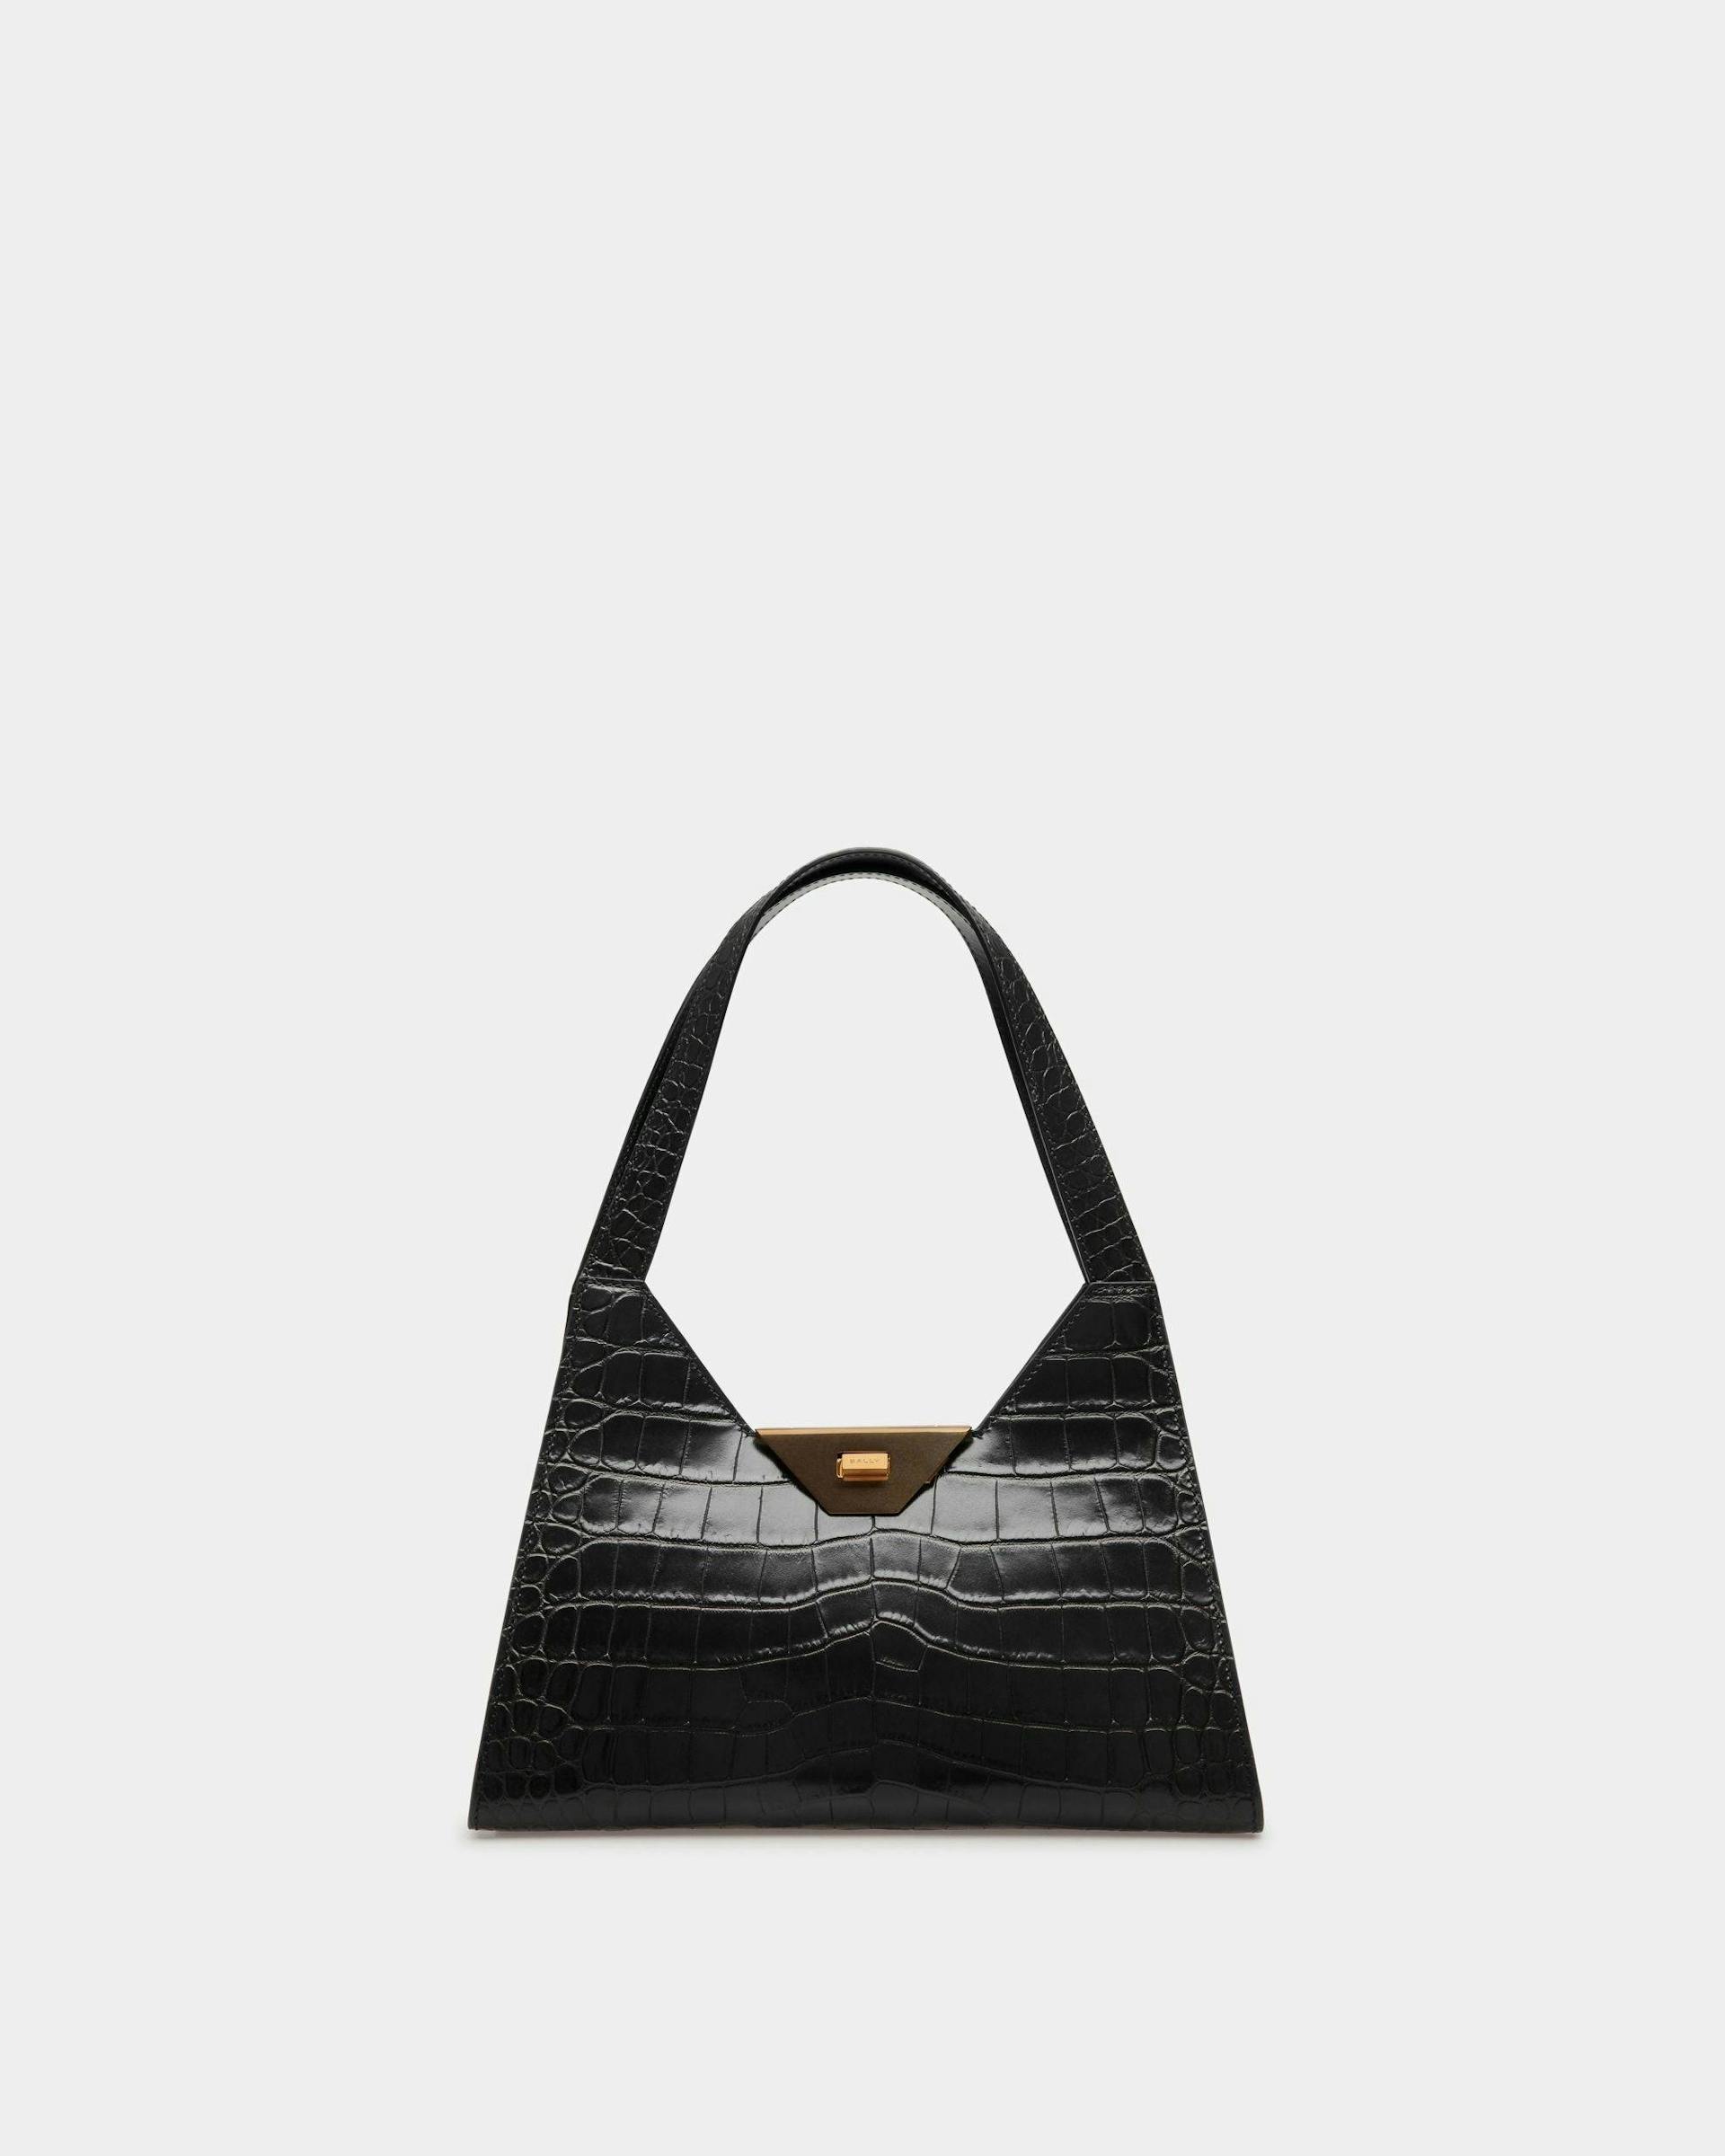 Women's Trilliant Shoulder Bag In Black Leather | Bally | Still Life Front